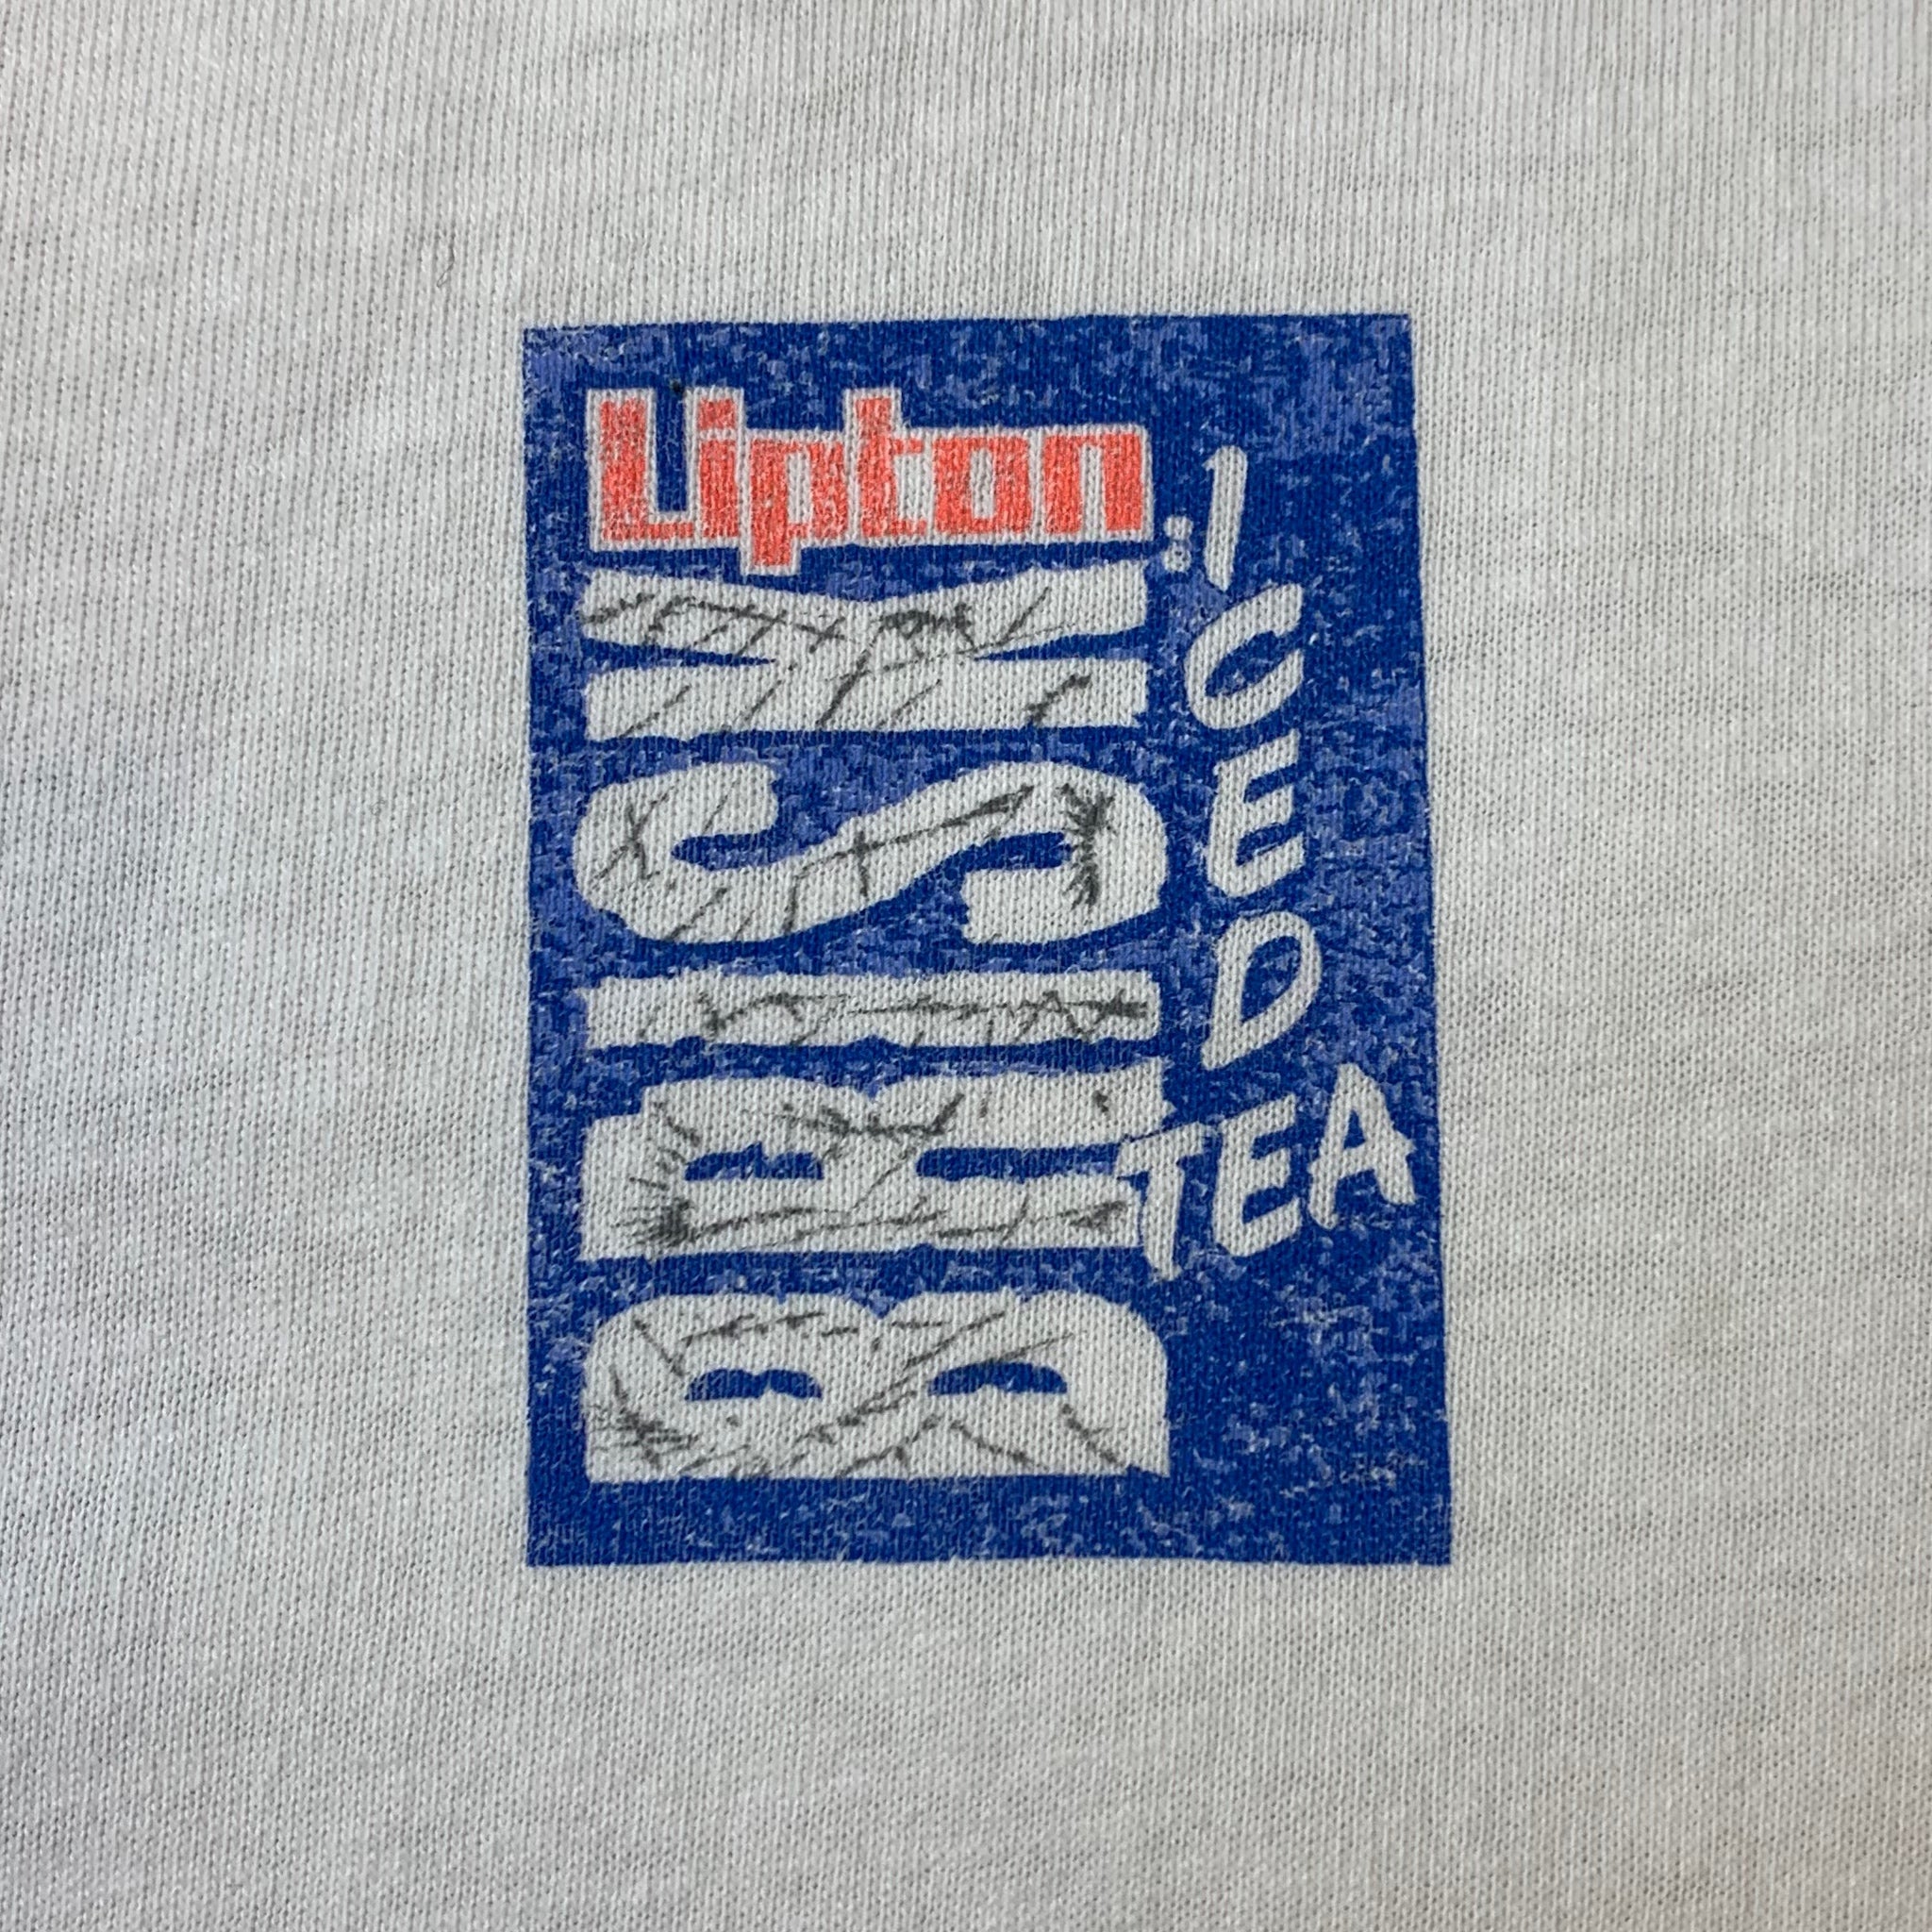 1988 Bruce Willis Brisk Iced Tea Vintage Shirt - White Shirt